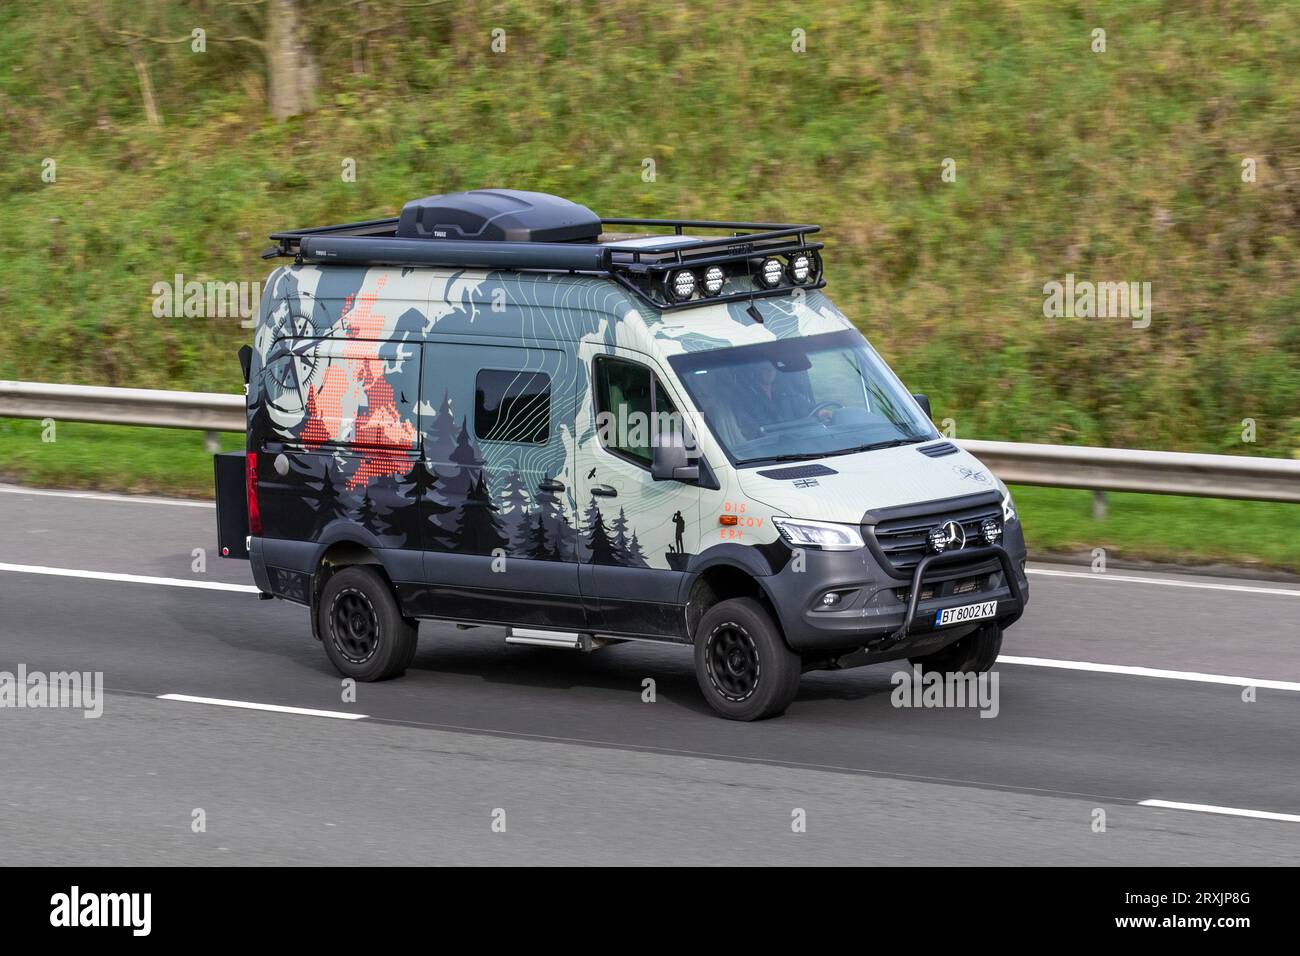 Mercedes Vito Transformed Into Adventure 4x4 Van By German Tuners